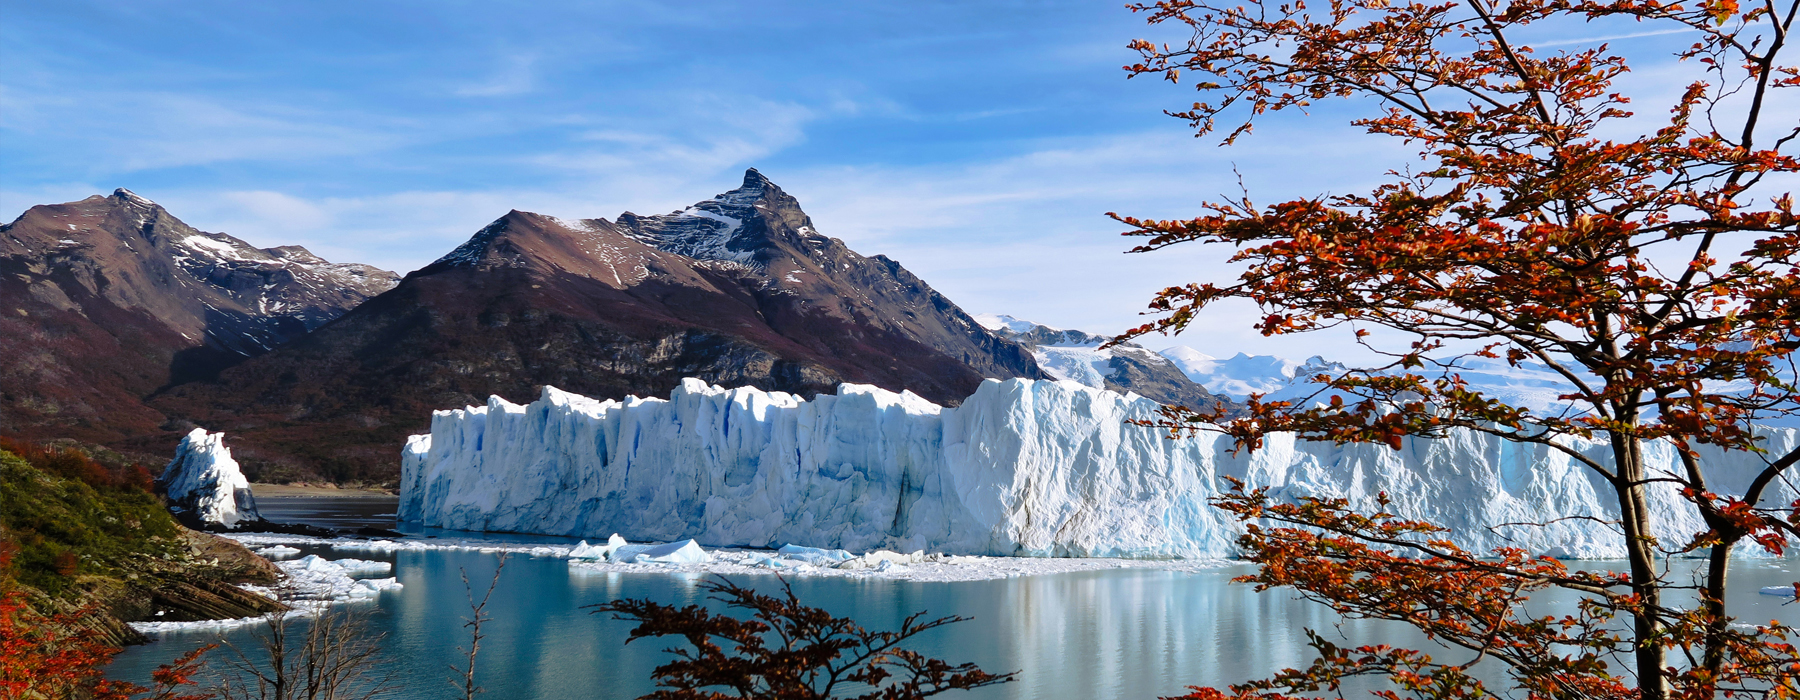 Perito Moreno Glacier View, Patagonia - Atelier South America